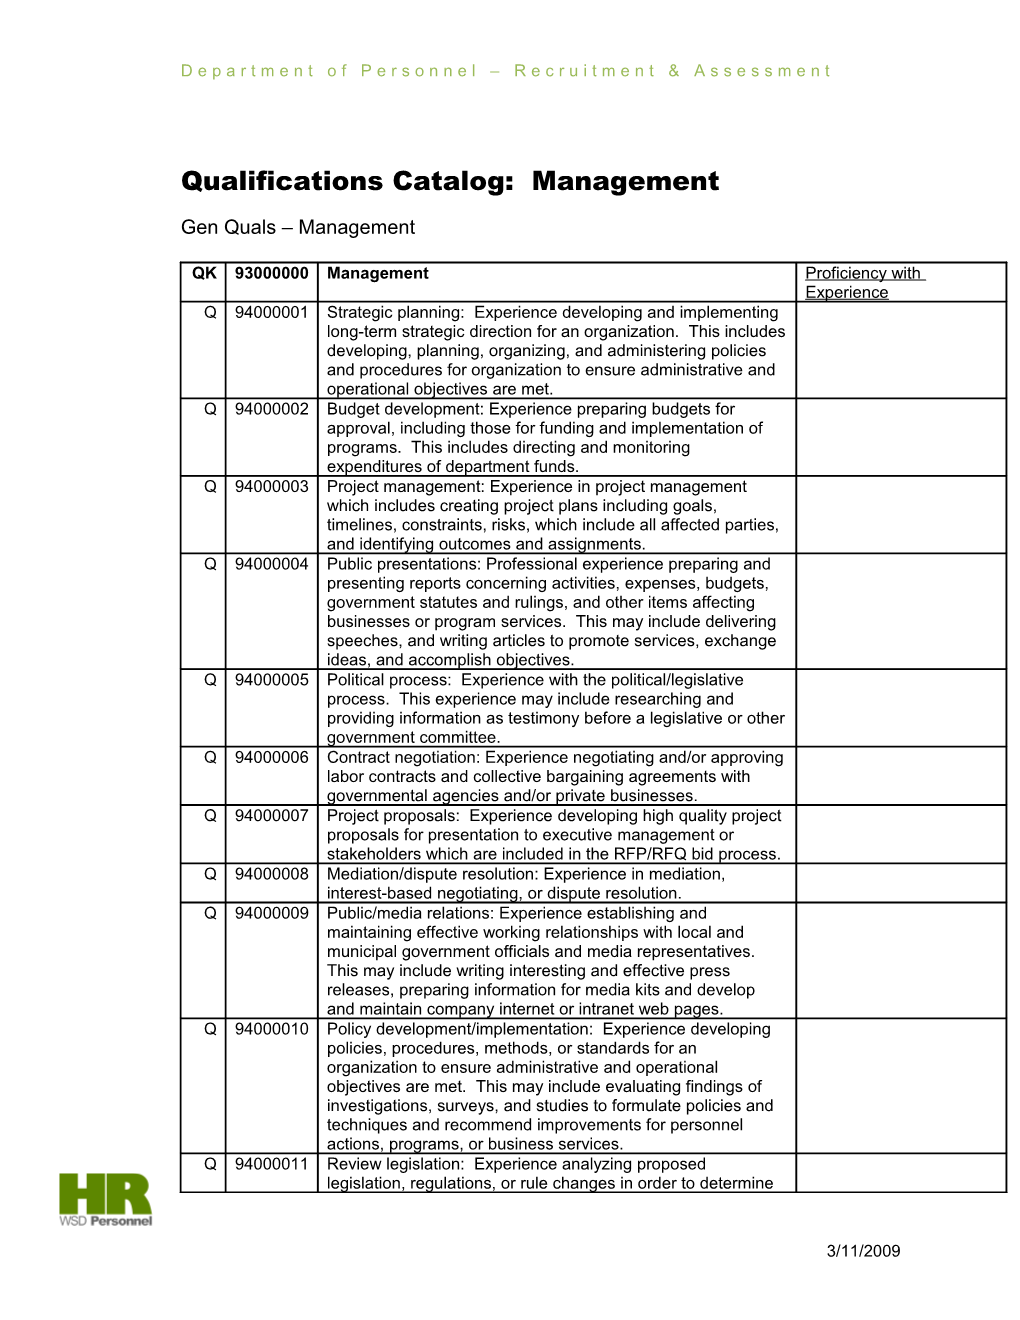 Qualifications Catalog: Management